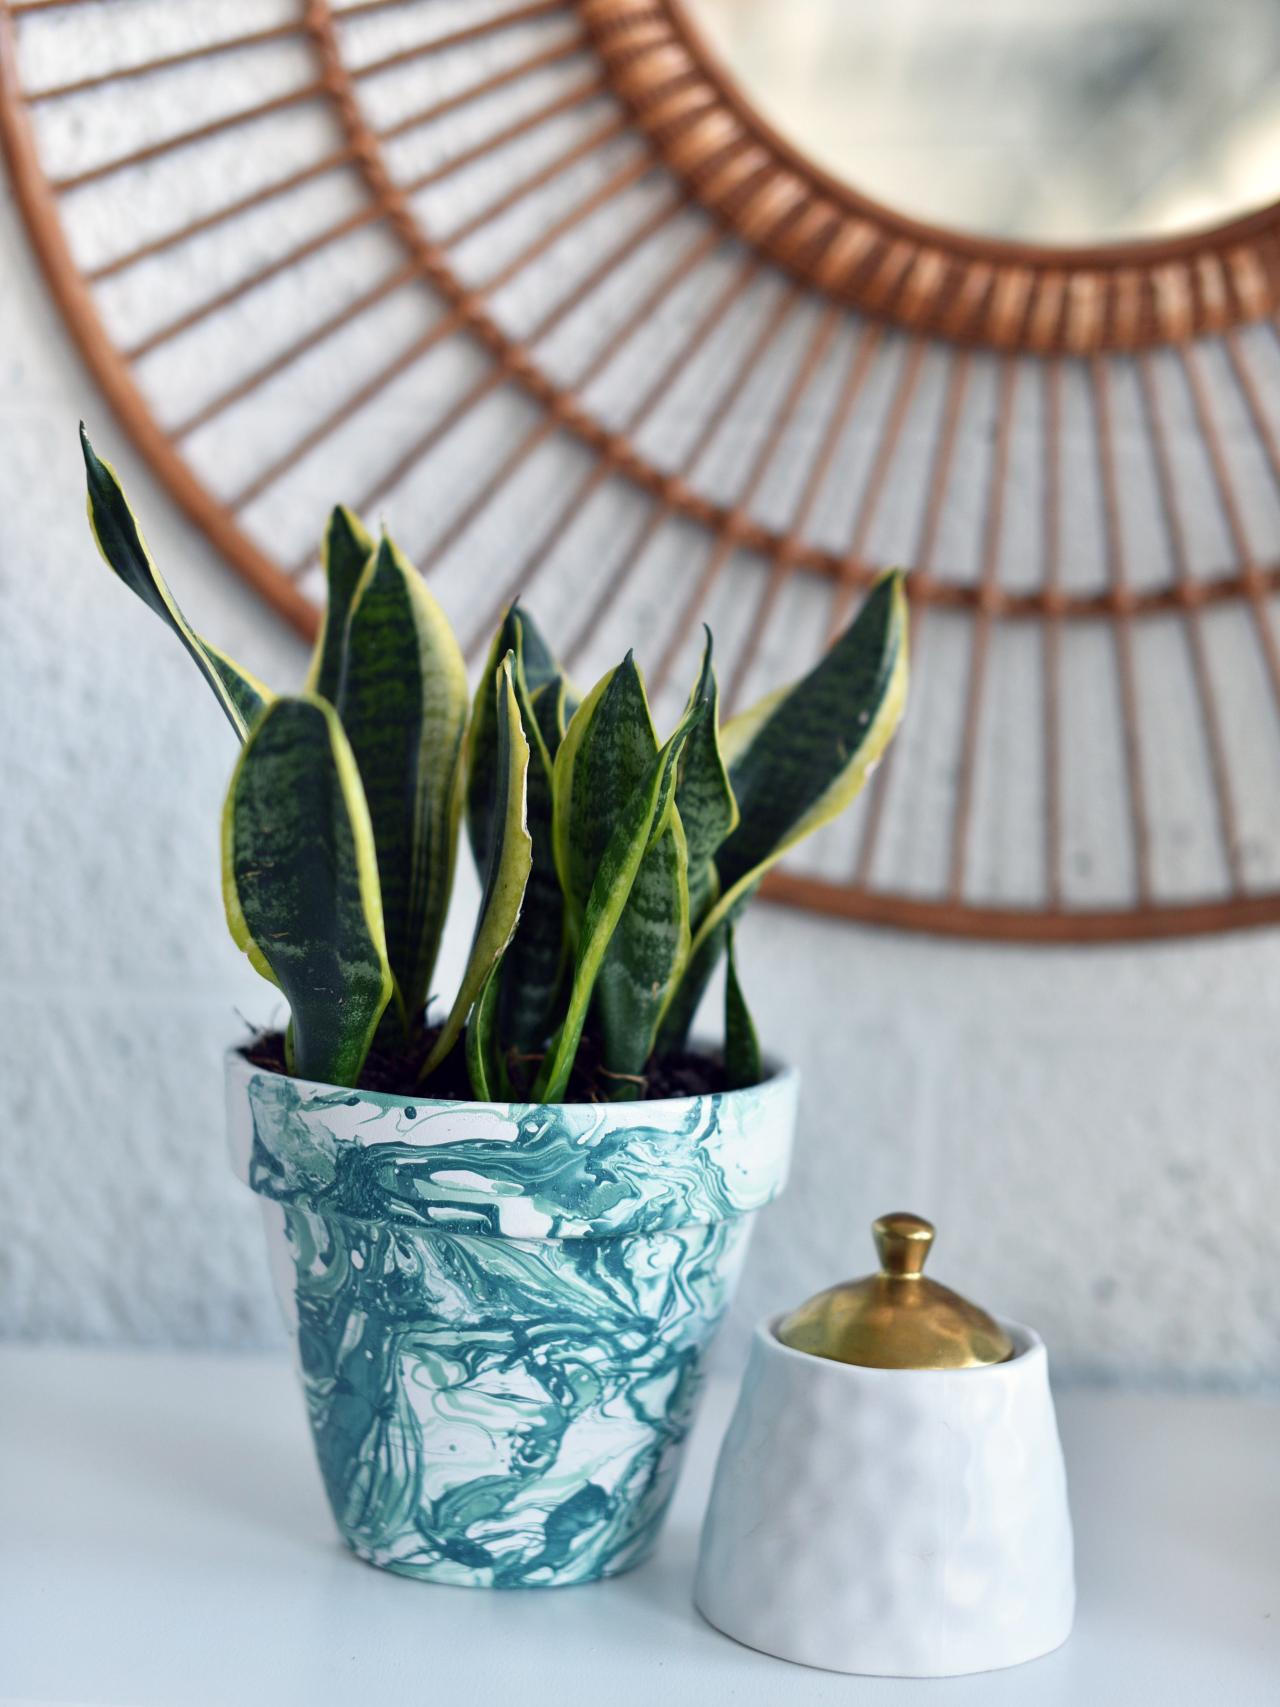 DIY Bright, Marbled Pots Using Nail Polish | HGTV's Decorating & Design  Blog | HGTV